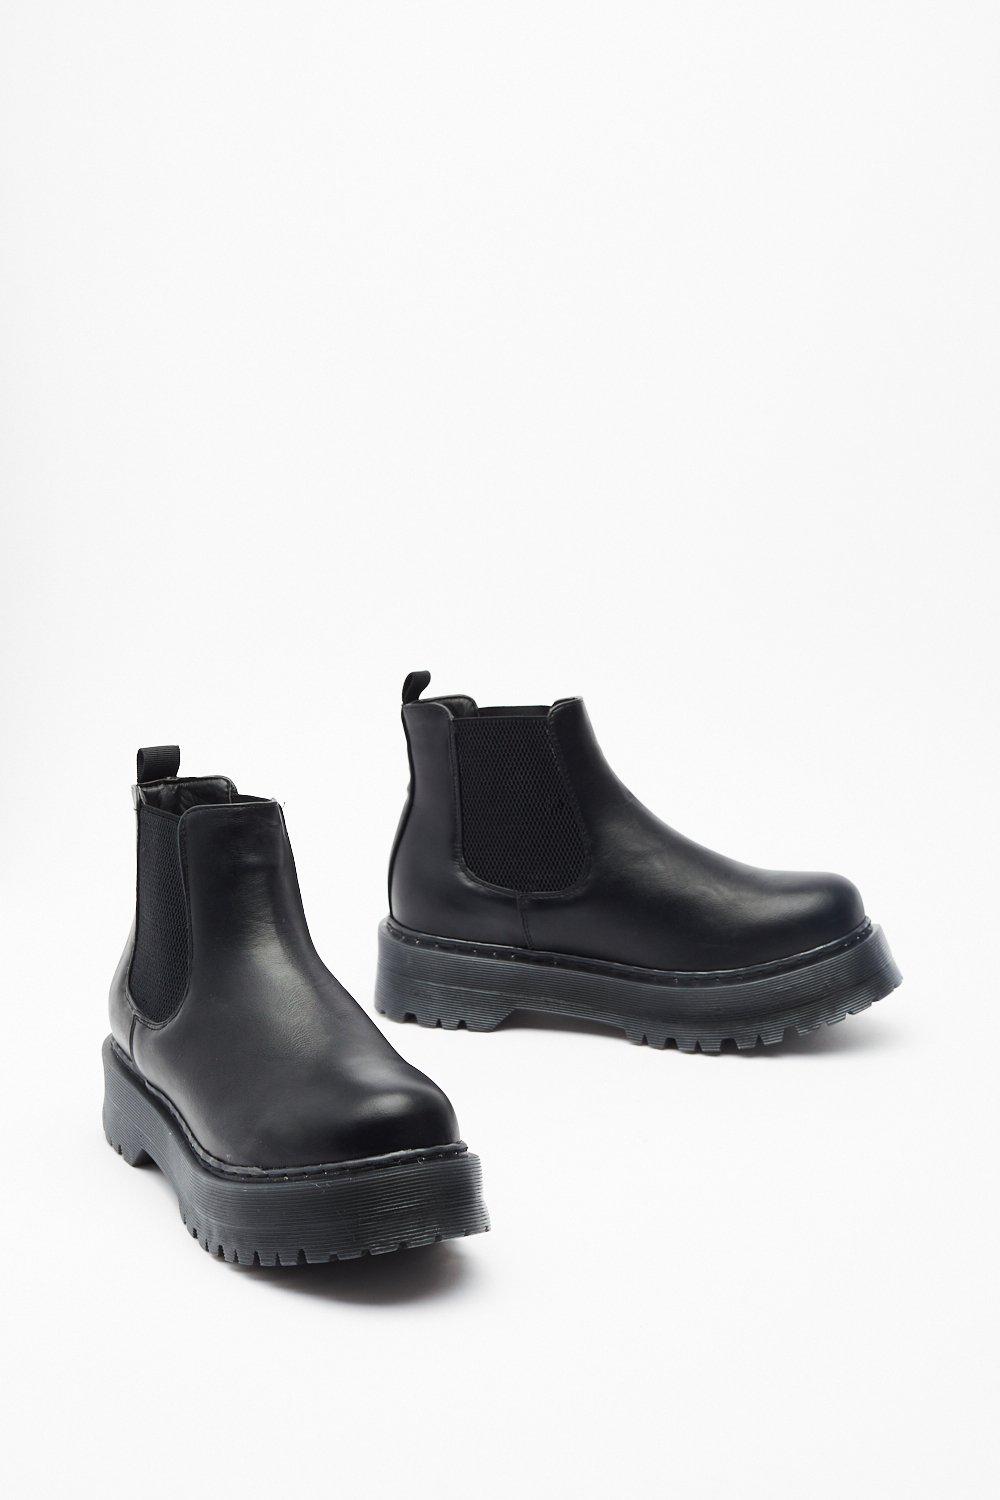 black faux leather chelsea boots